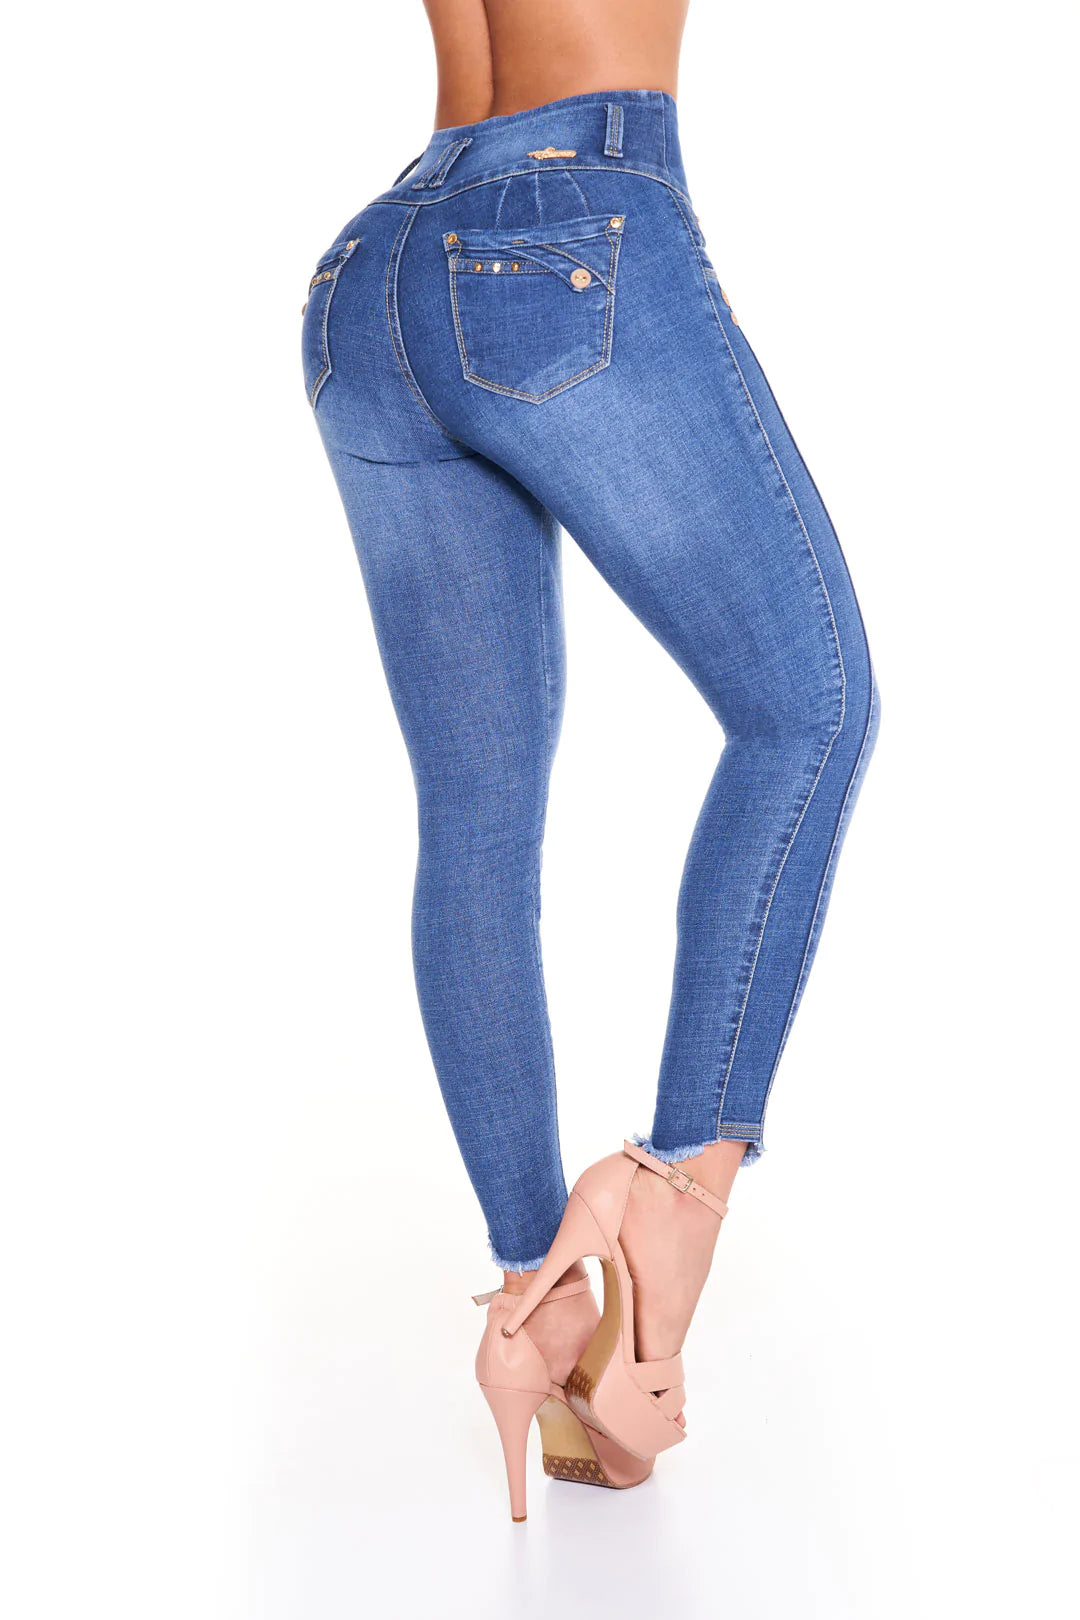 Classic Butt Lift Jeans – Latina Styles